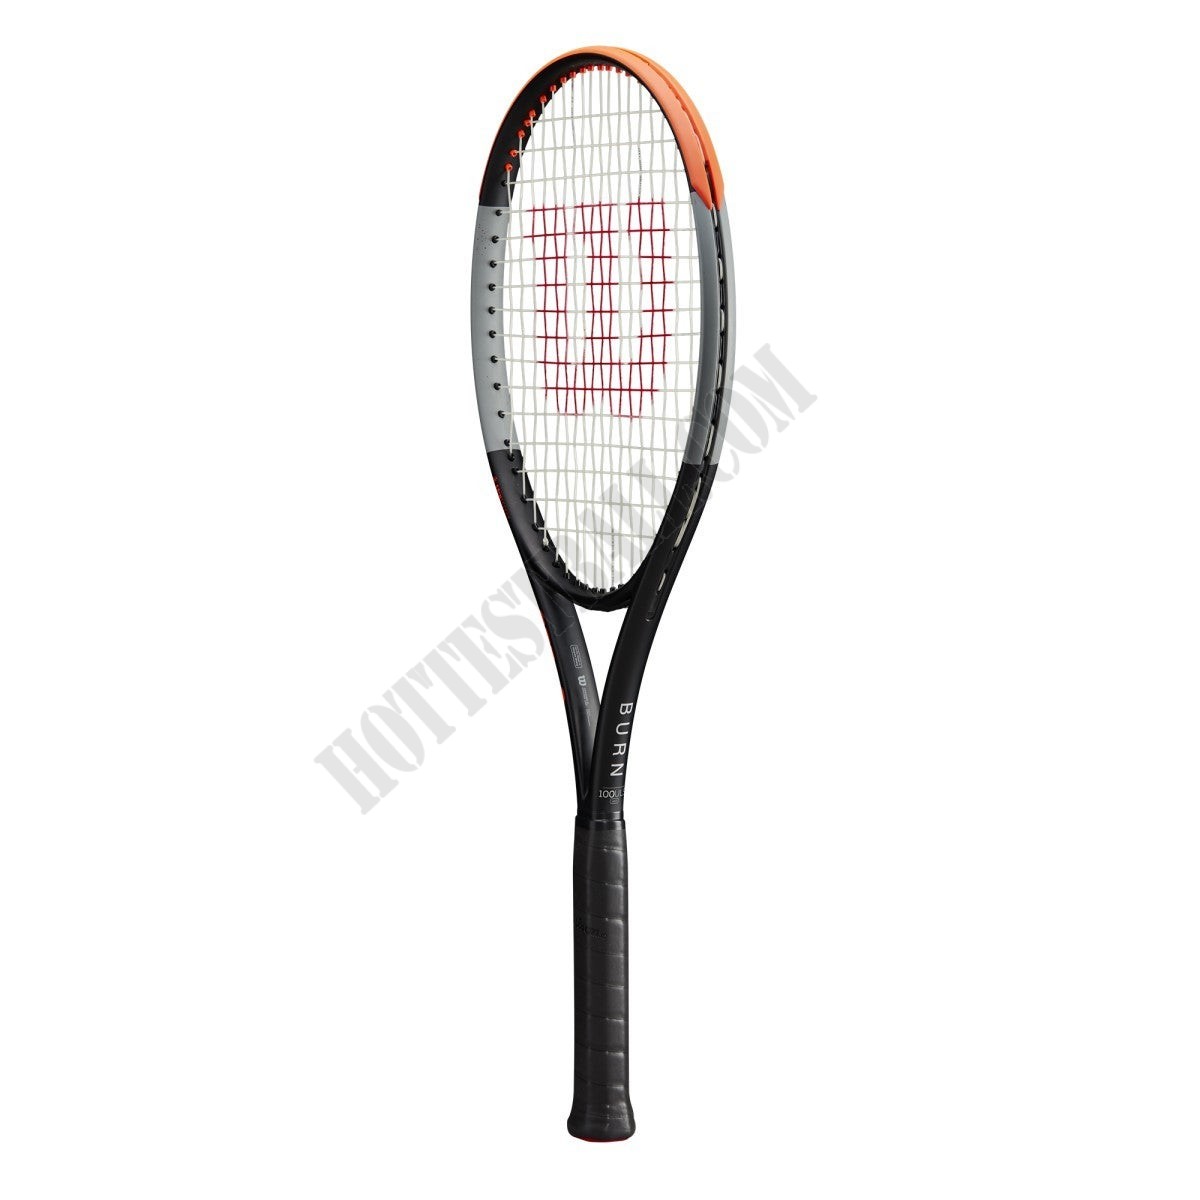 Burn 100ULS v4 Tennis Racket - Wilson Discount Store - -2